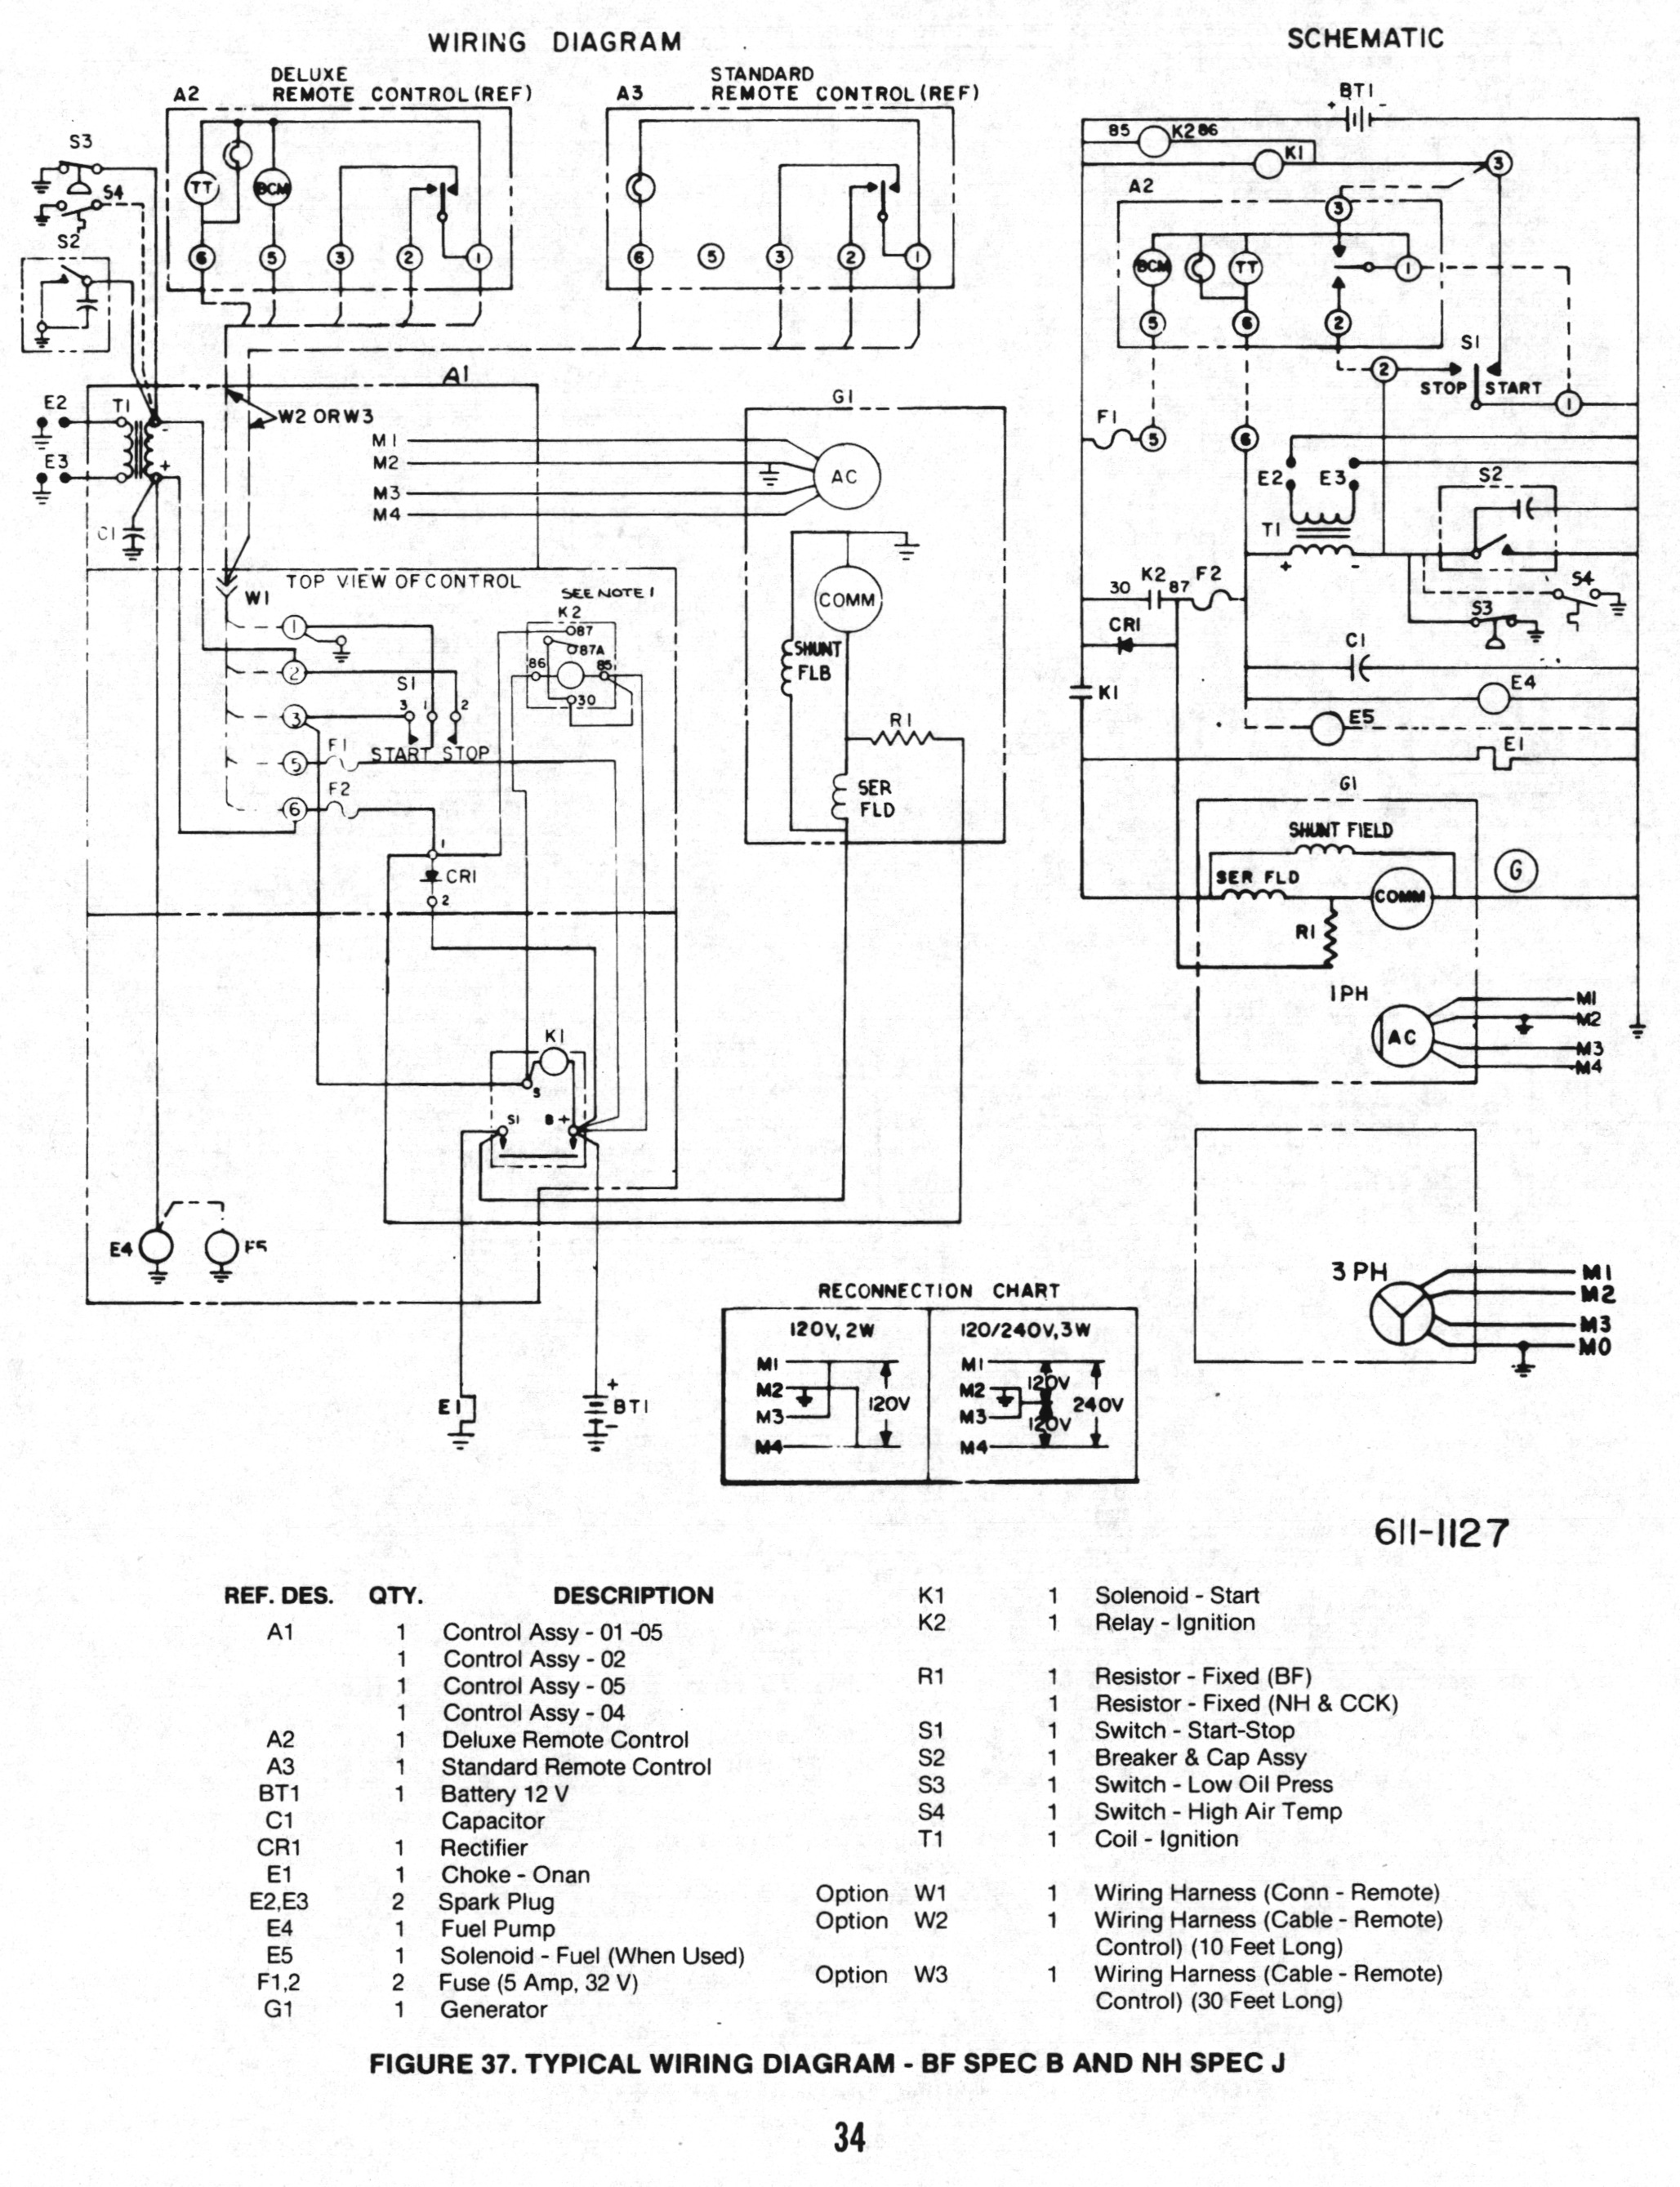 Diagram Cummins Onan Wiring Diagram Full Version Hd Quality Wiring Diagram Playdiagrams Belen Rodriguez It